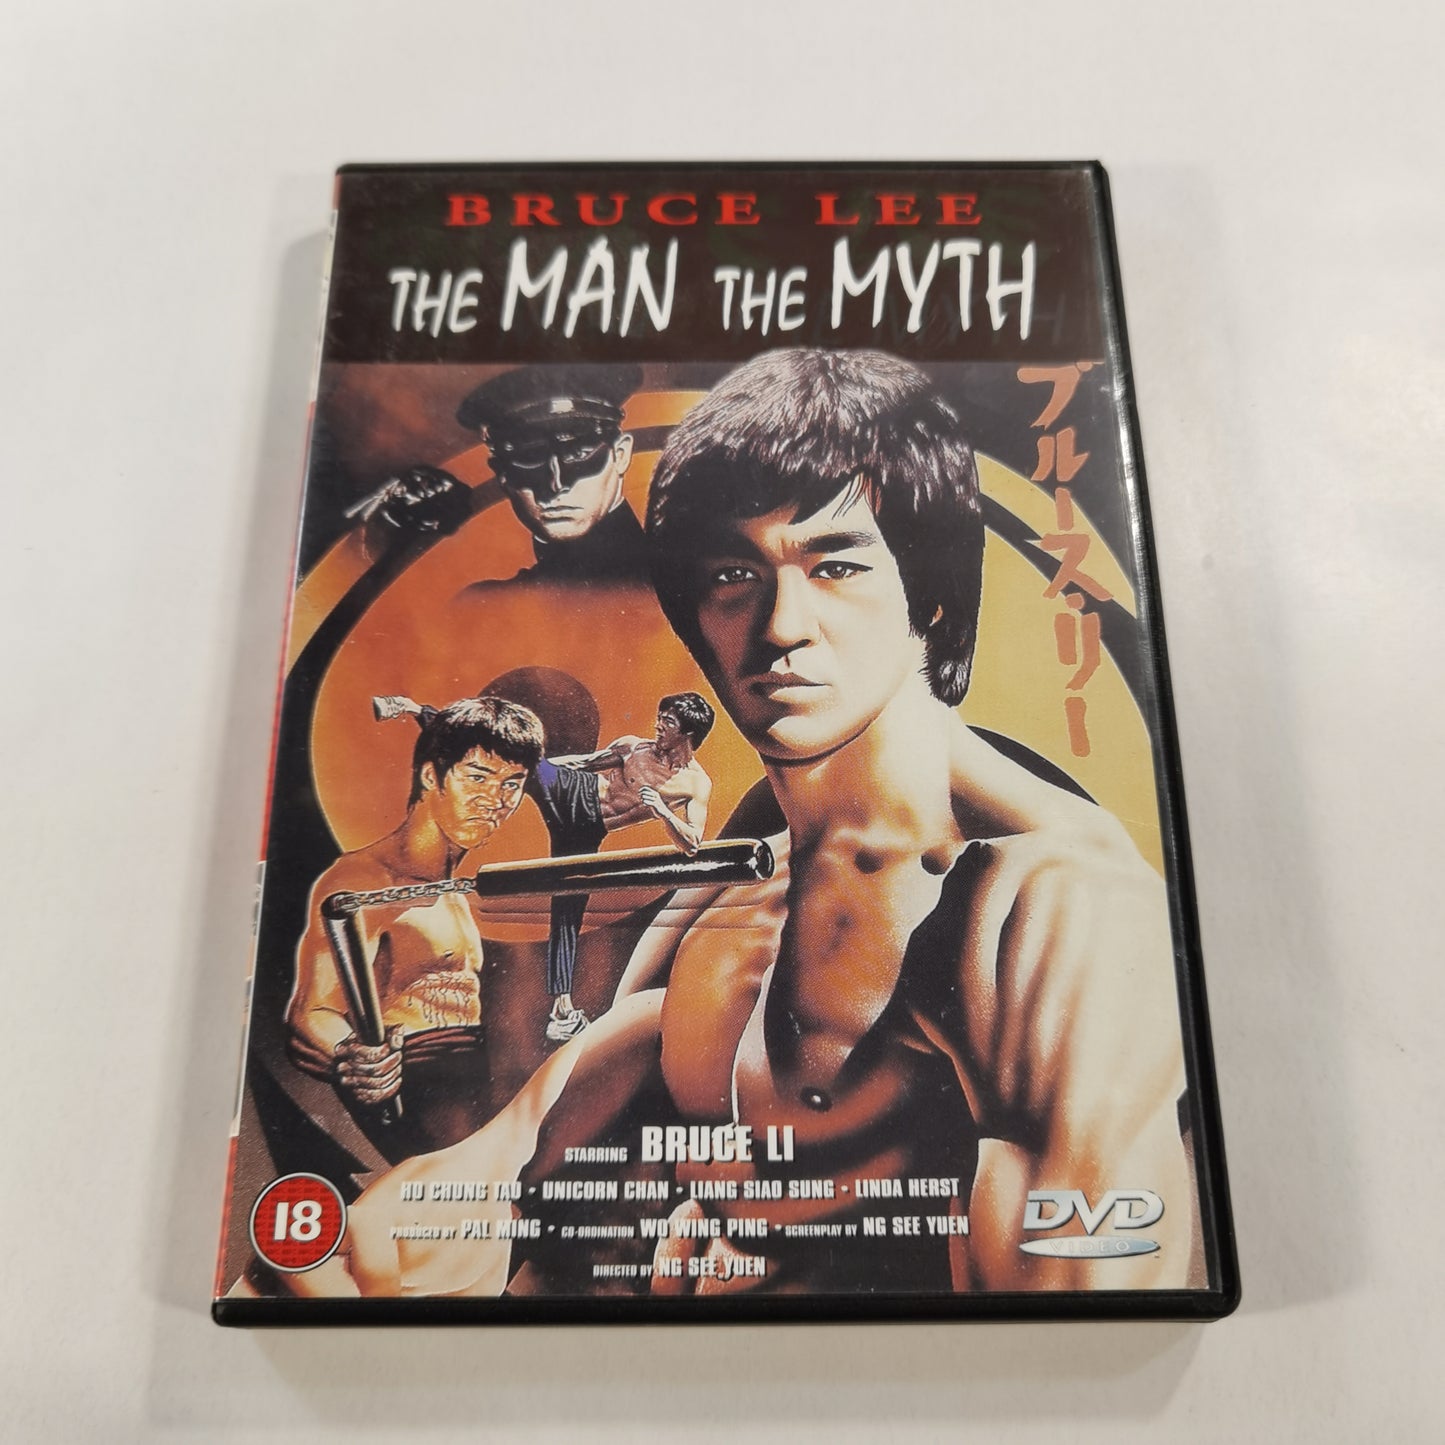 Bruce Lee: The Man, the Myth (1976) - DVD UK 2000